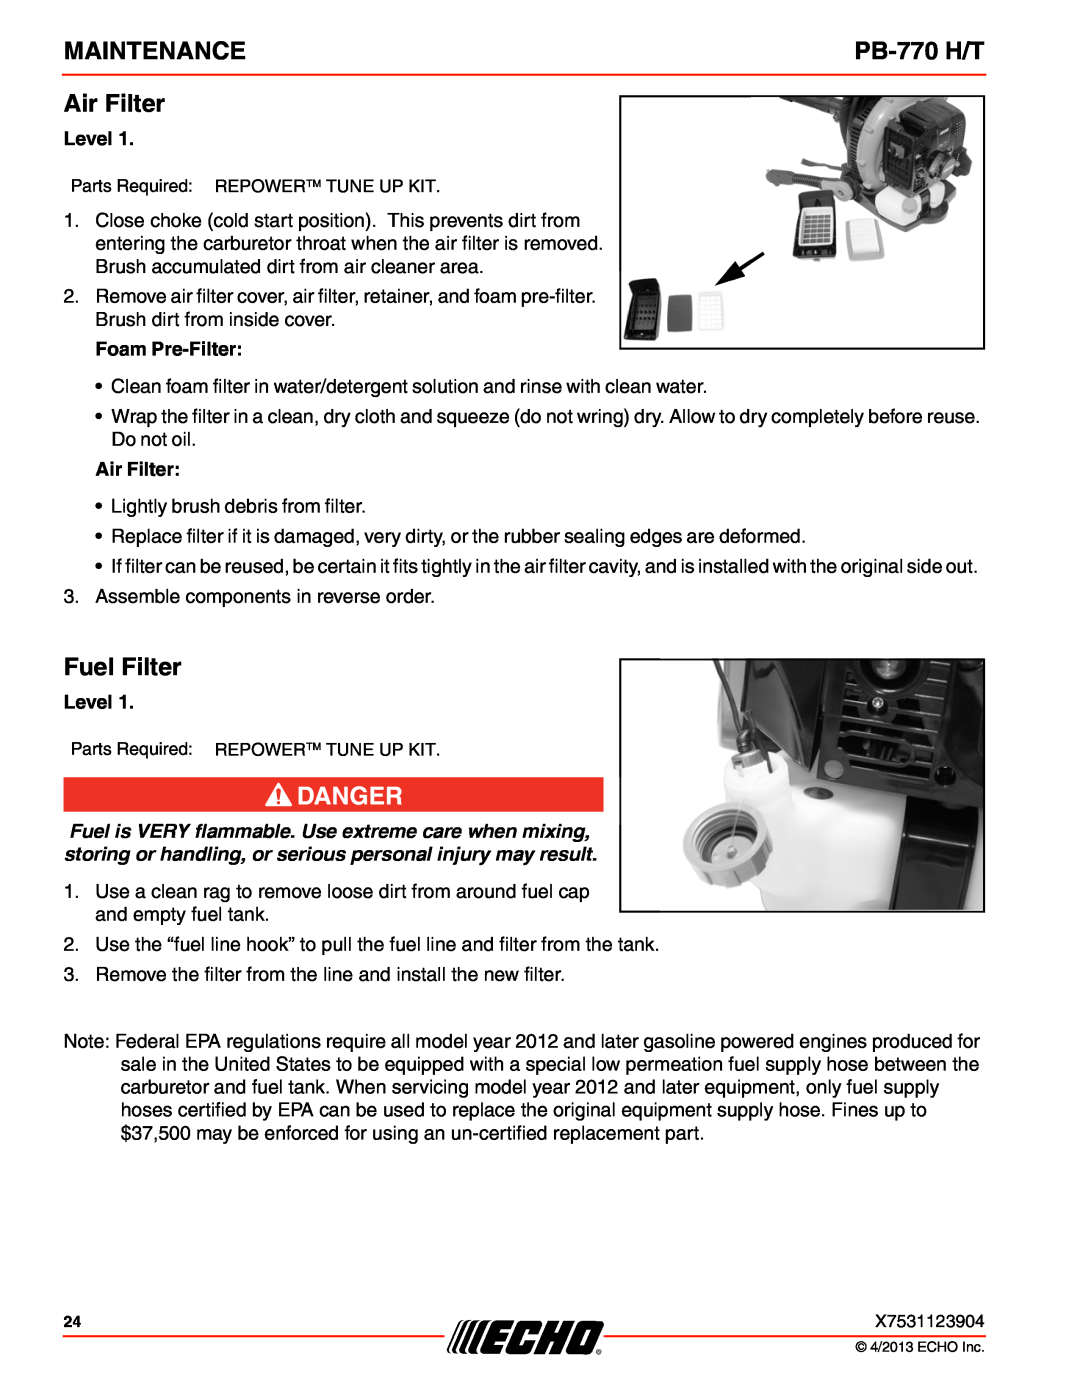 Echo PB-770 H/T specifications Air Filter, Fuel Filter, Level, Foam Pre-Filter, Maintenance 